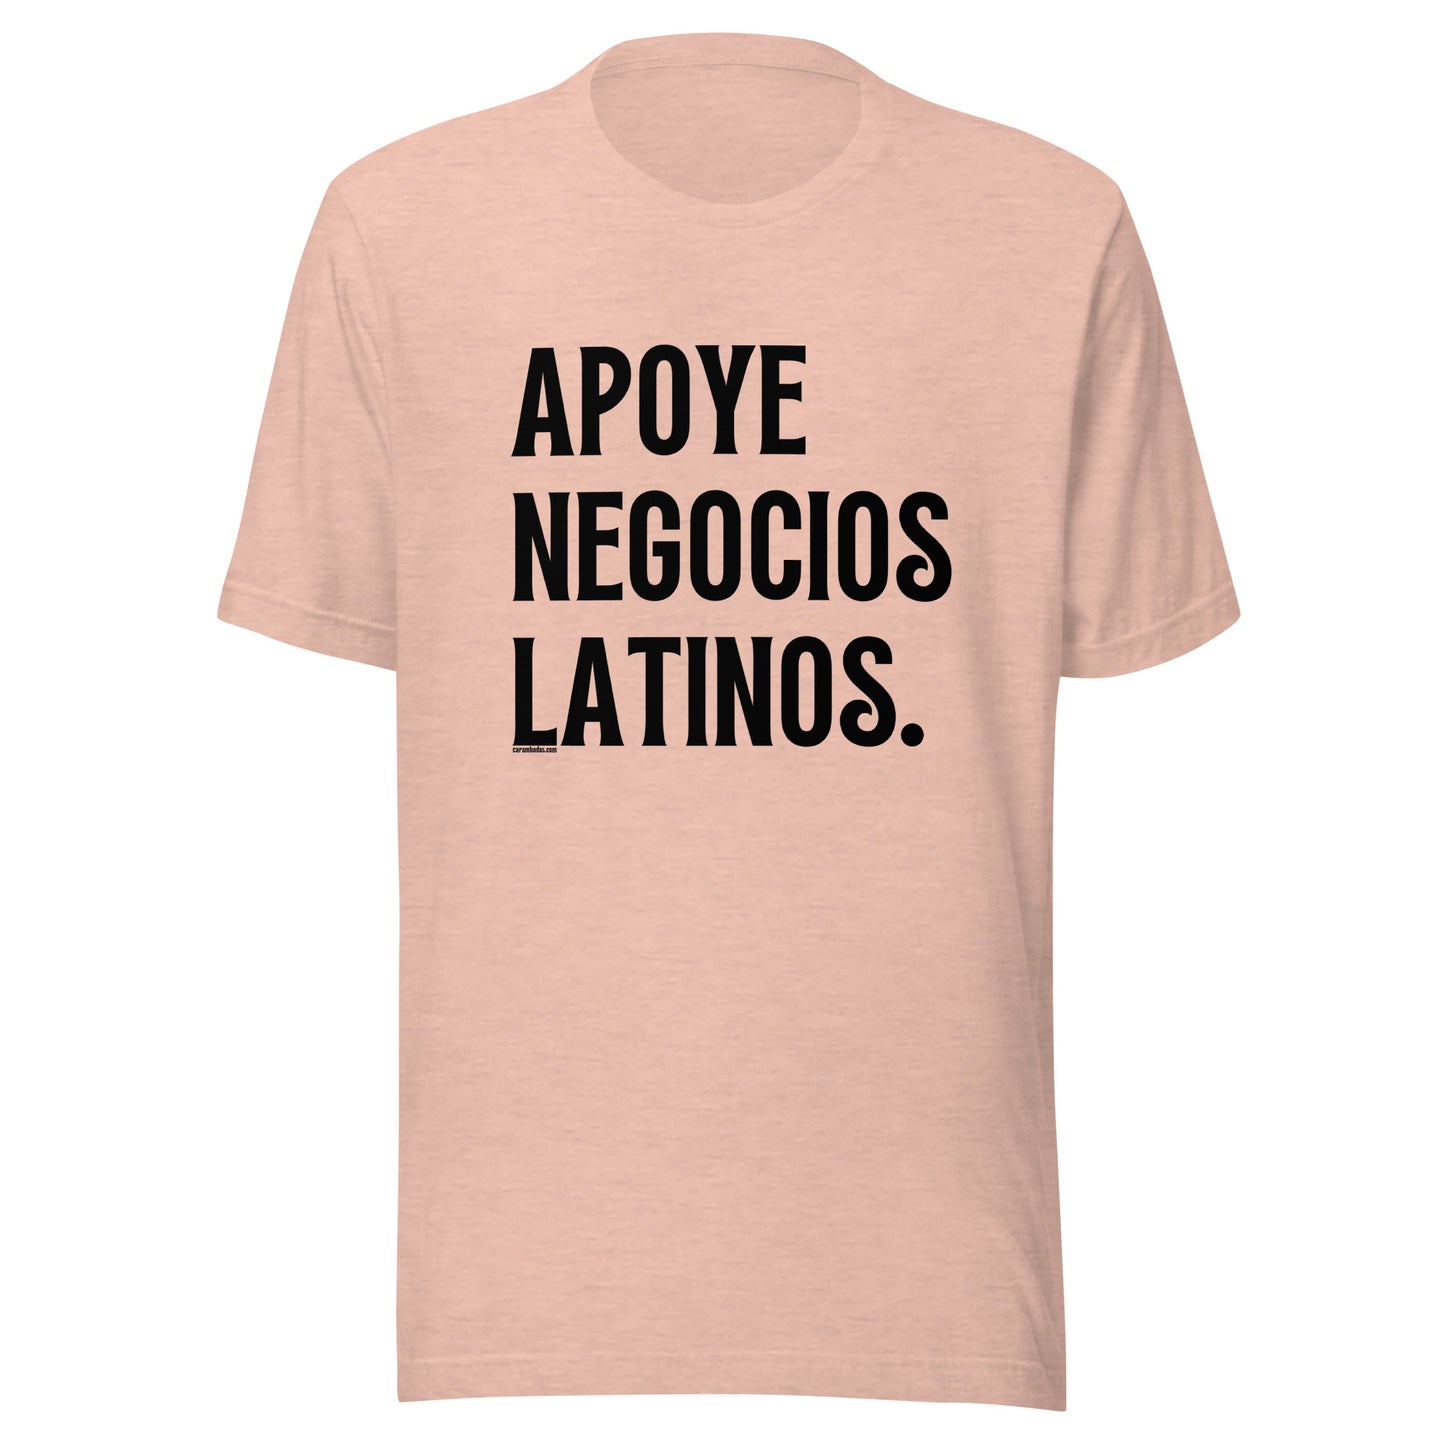 Apoye Negocios Latinos (Support Latino Businesses) Unisex T-shirt